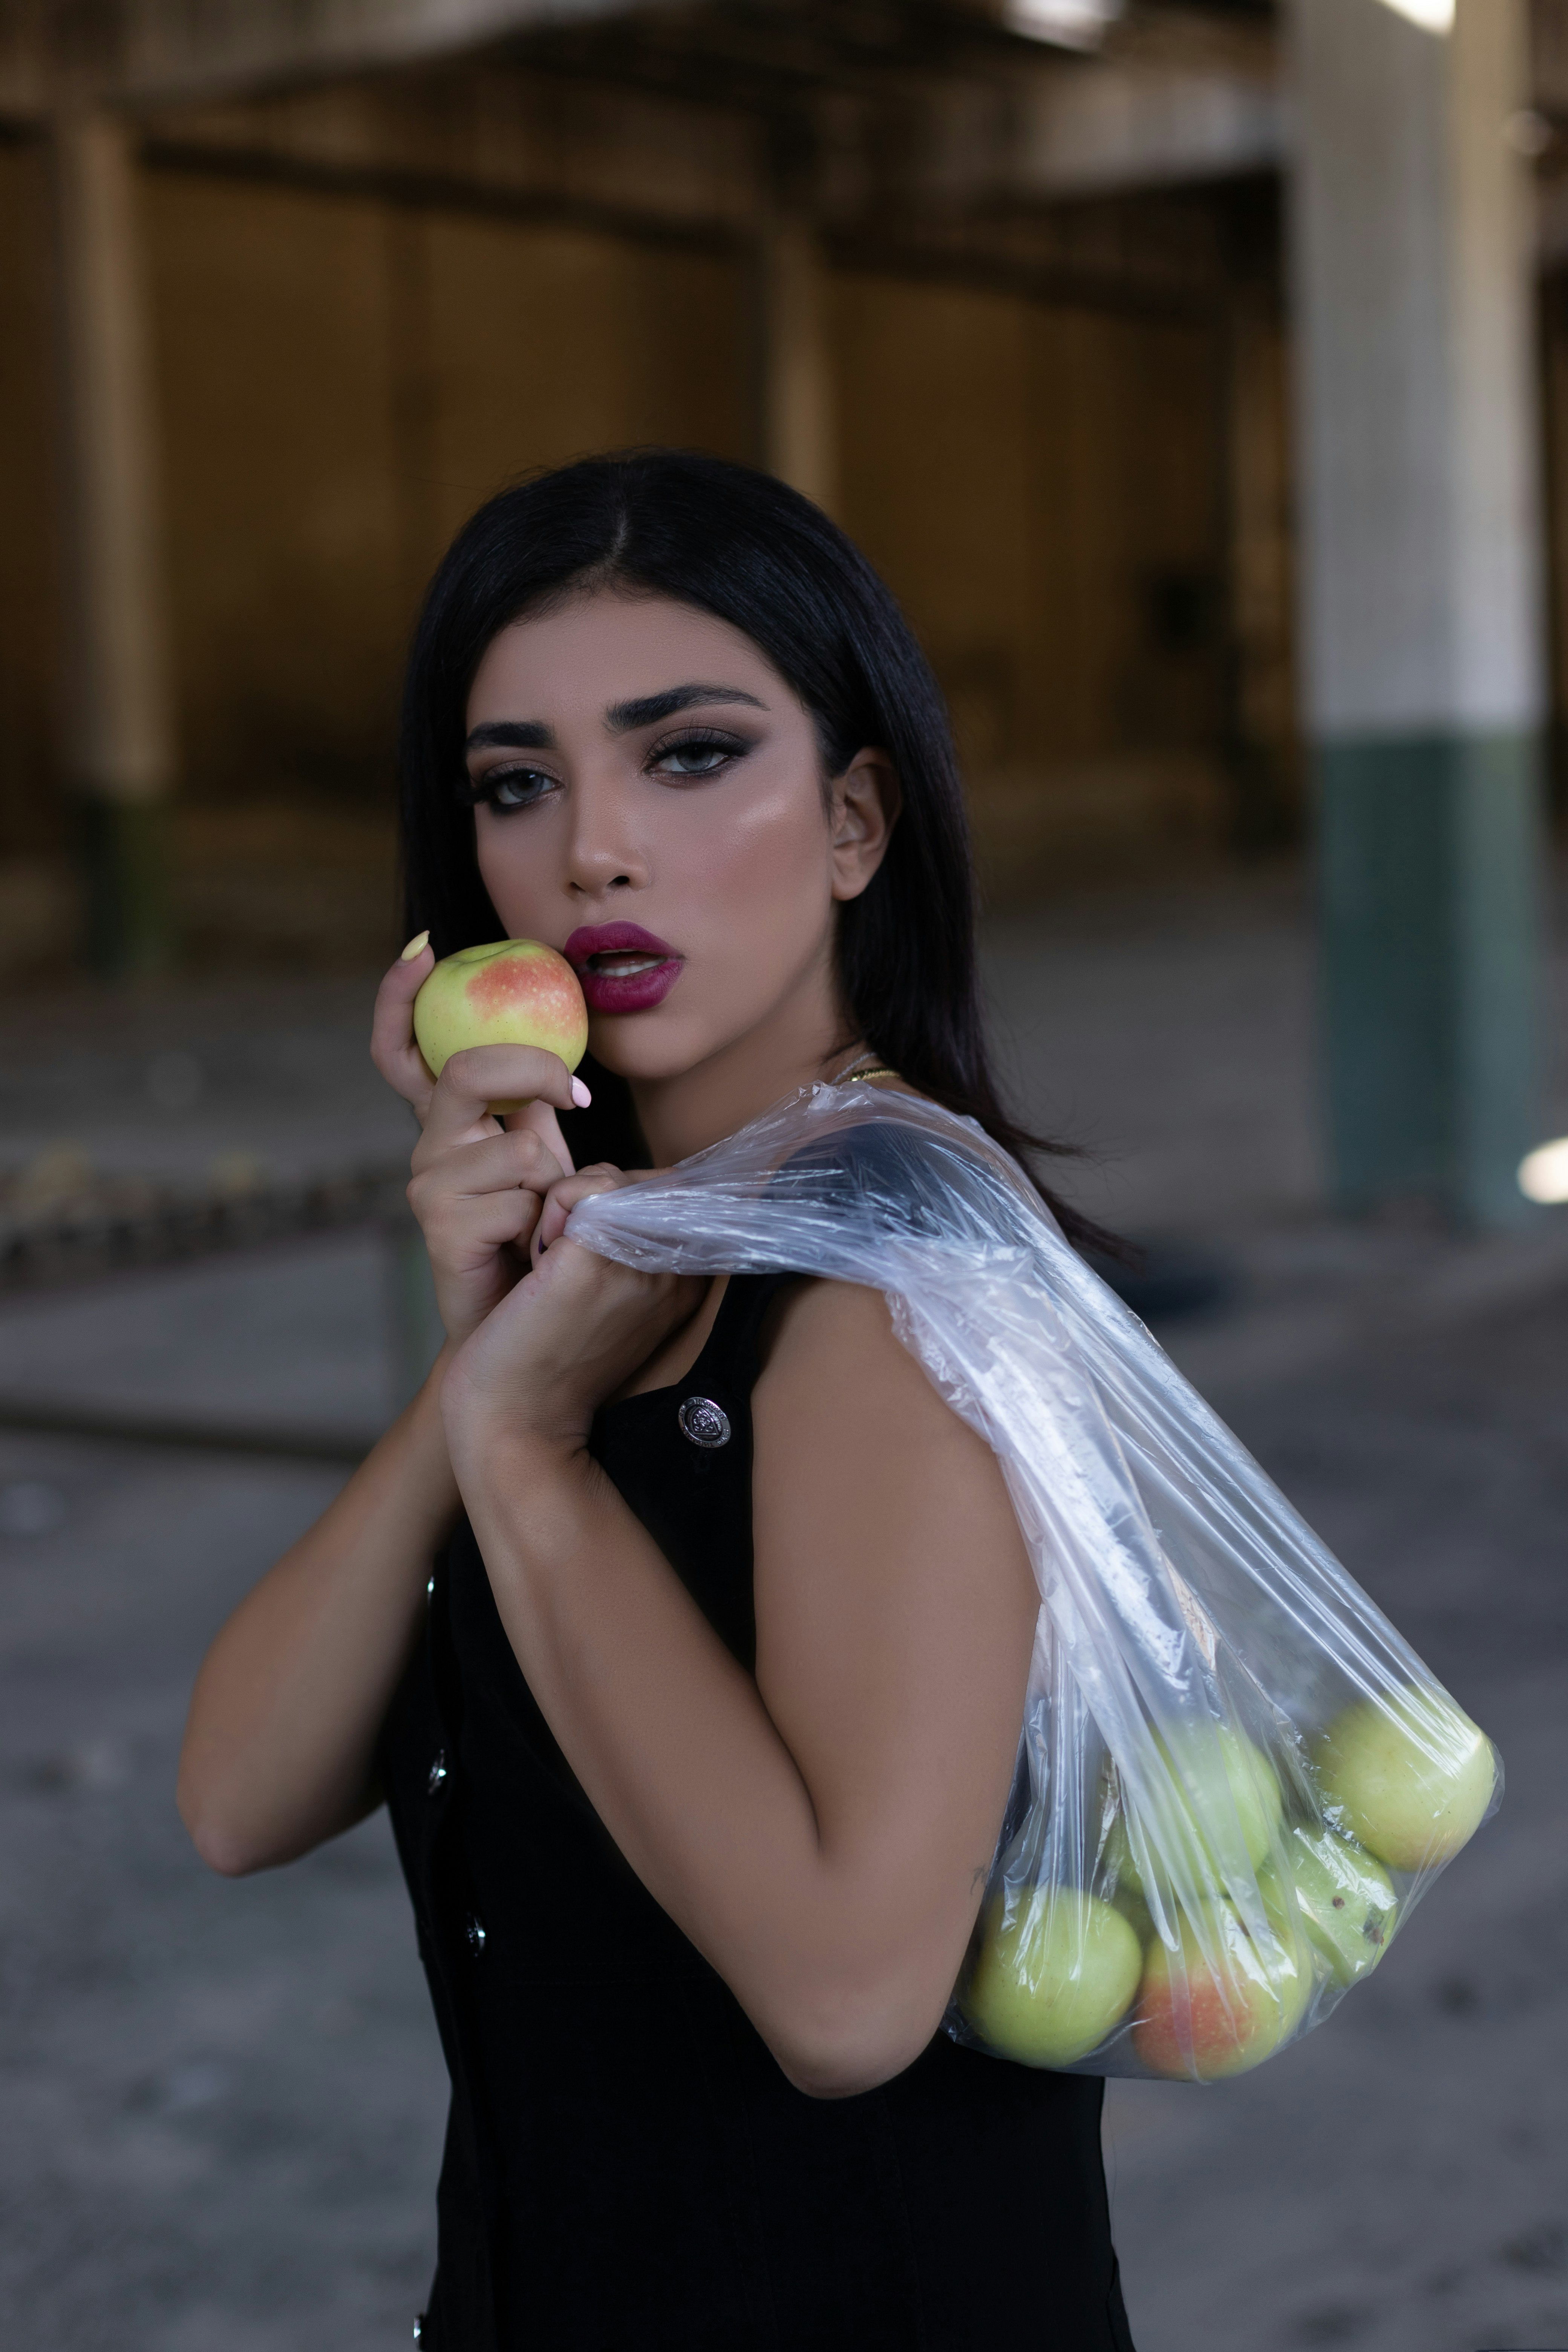 woman holding green apple fruit